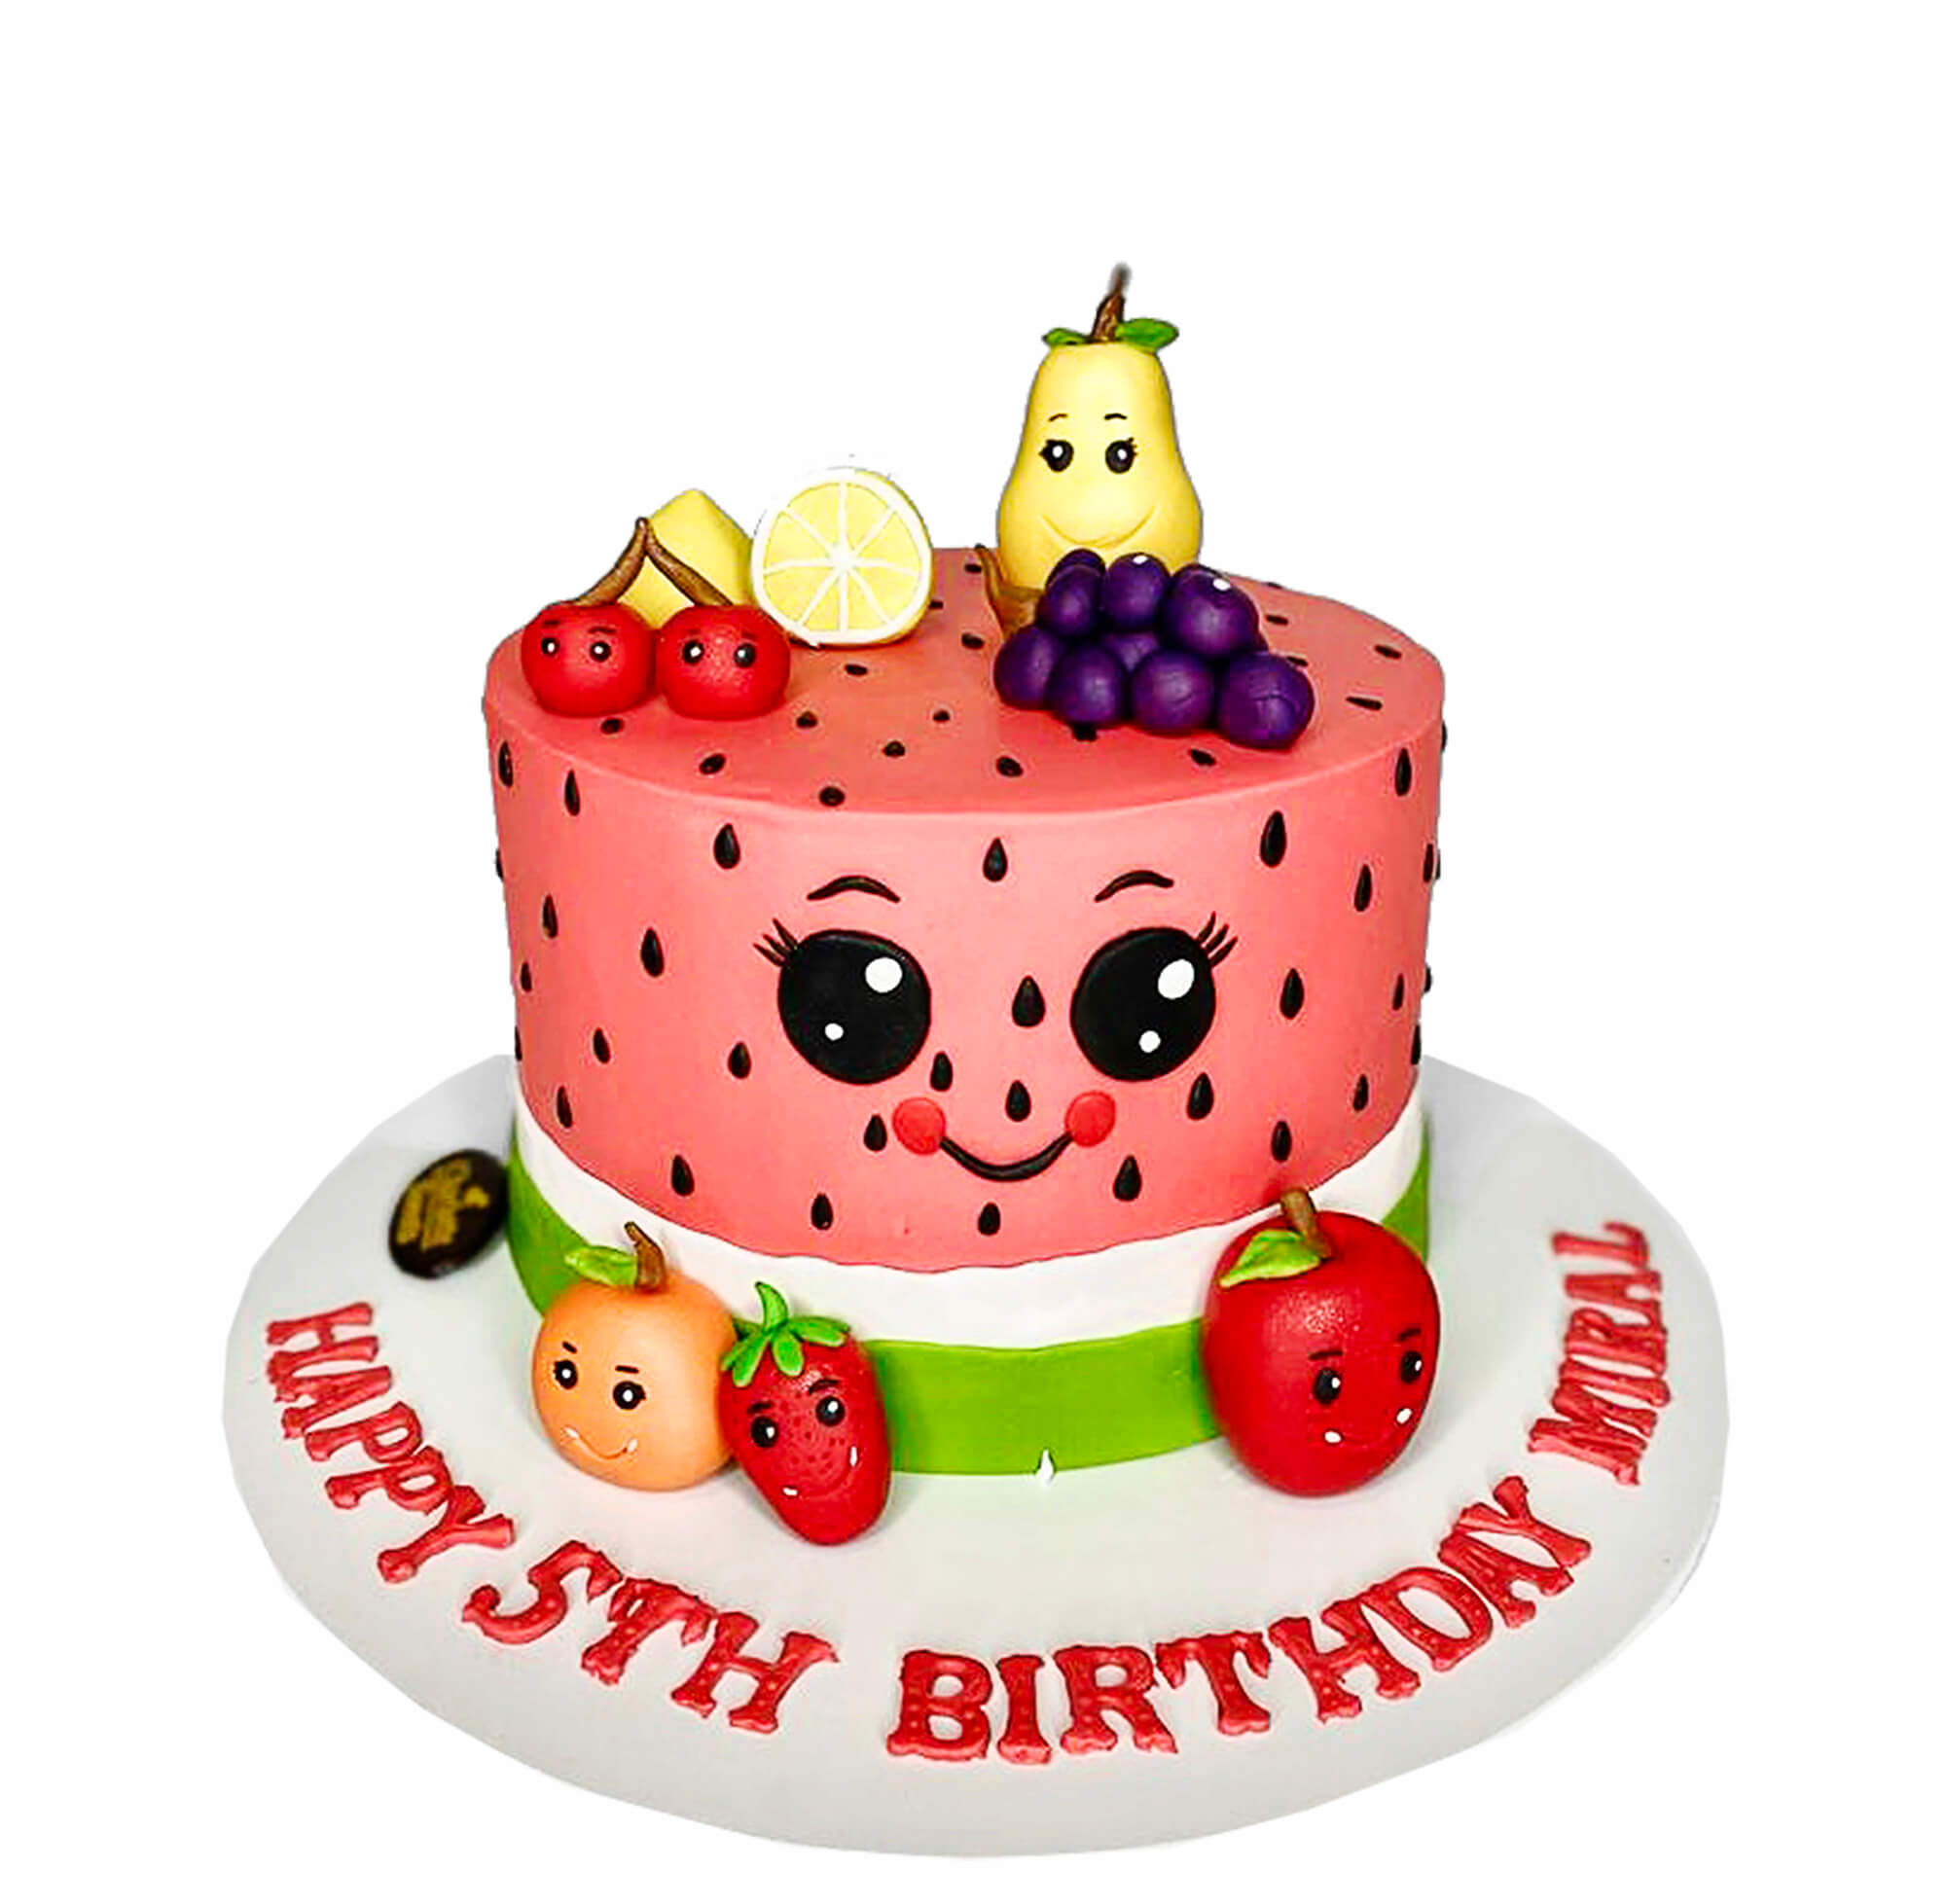 Crazycakes by Carlywarly - Roblox themed cake 🎂 #13thbirthday  #specialrequest #specialbirthday #milestonebirthday #chocolatecake  #chocolatebuttercream #nomnom #homebaker #ariellilydesigns #robloxcake #roblox  lox